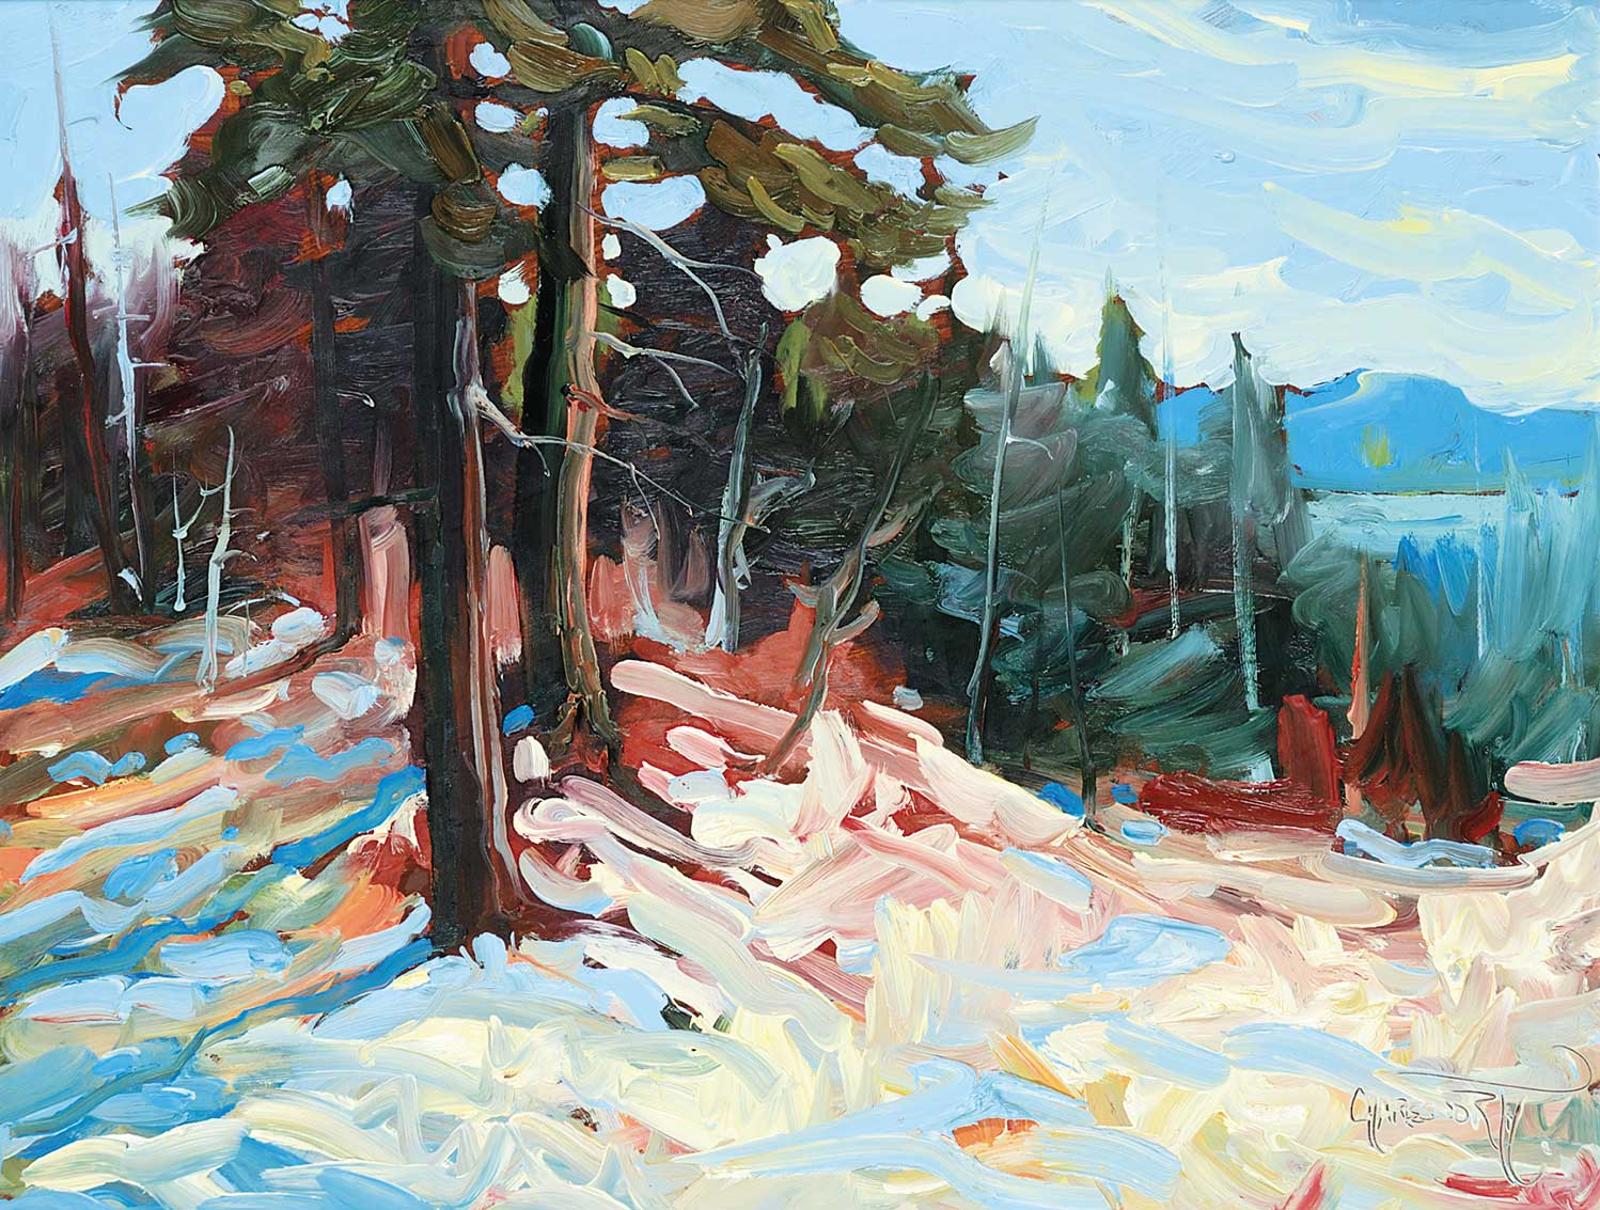 Rod Charlesworth (1955) - Pines of Summer